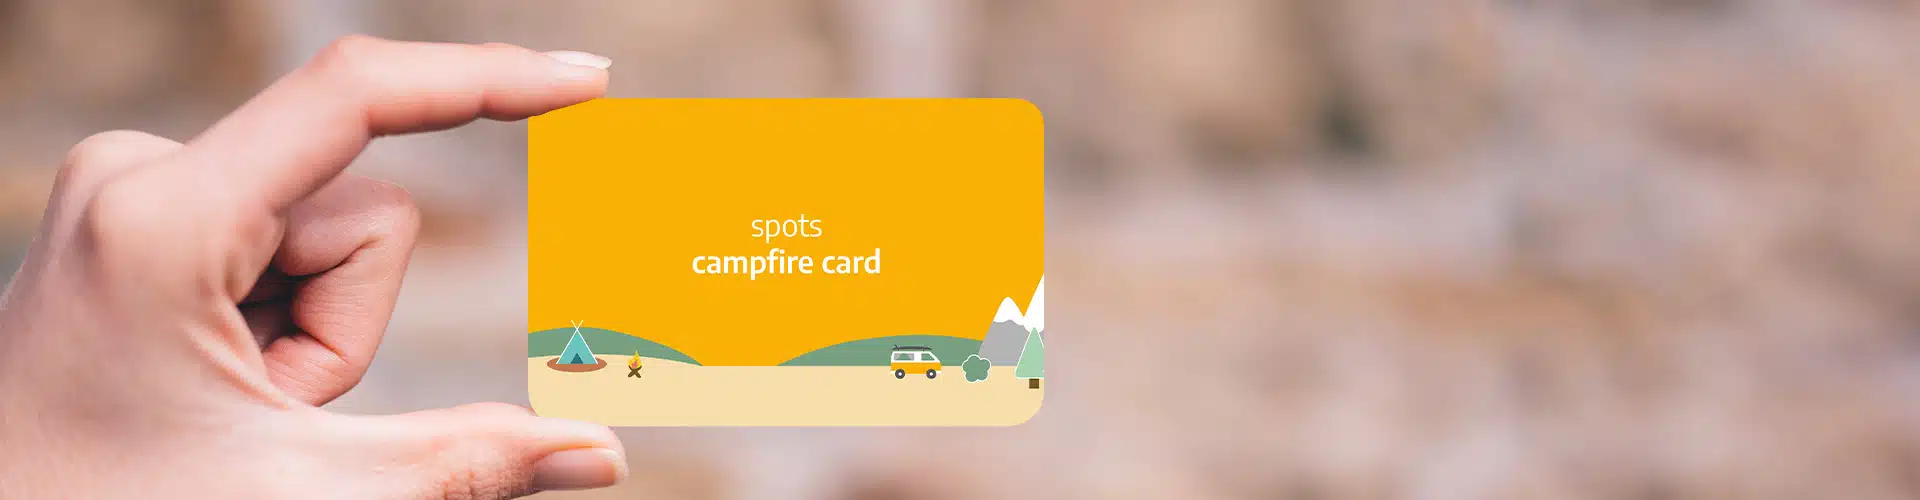 roadsurfer spots campfire card